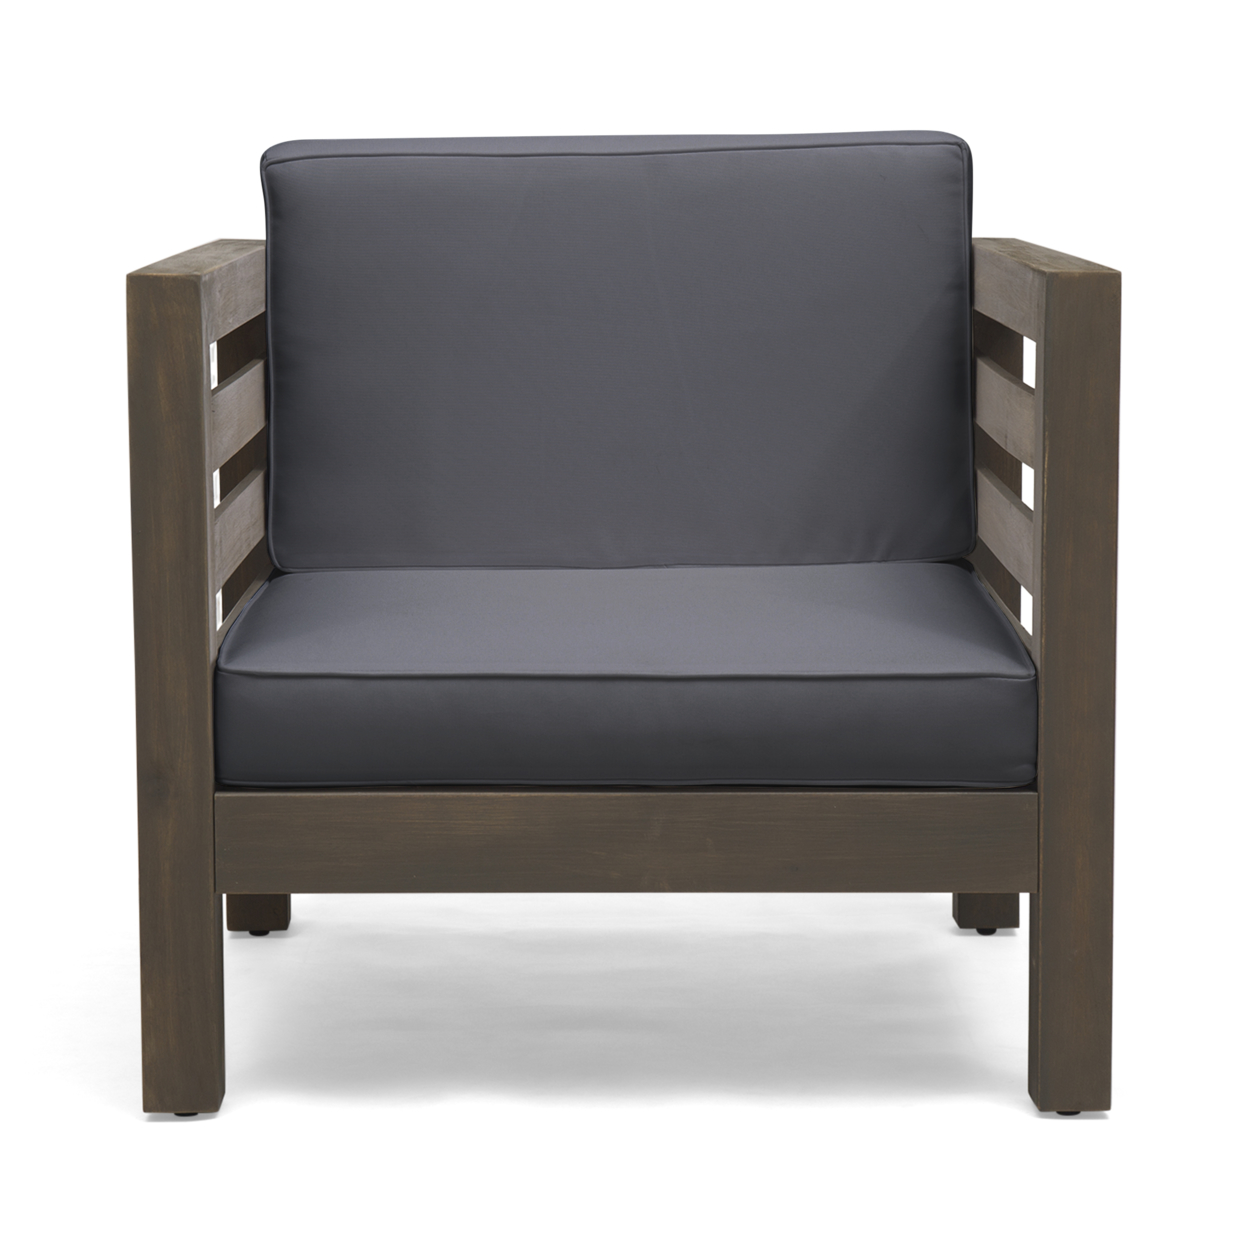 Louise Outdoor Acacia Wood Club Chair With Cushion - Gray Finish + Dark Gray